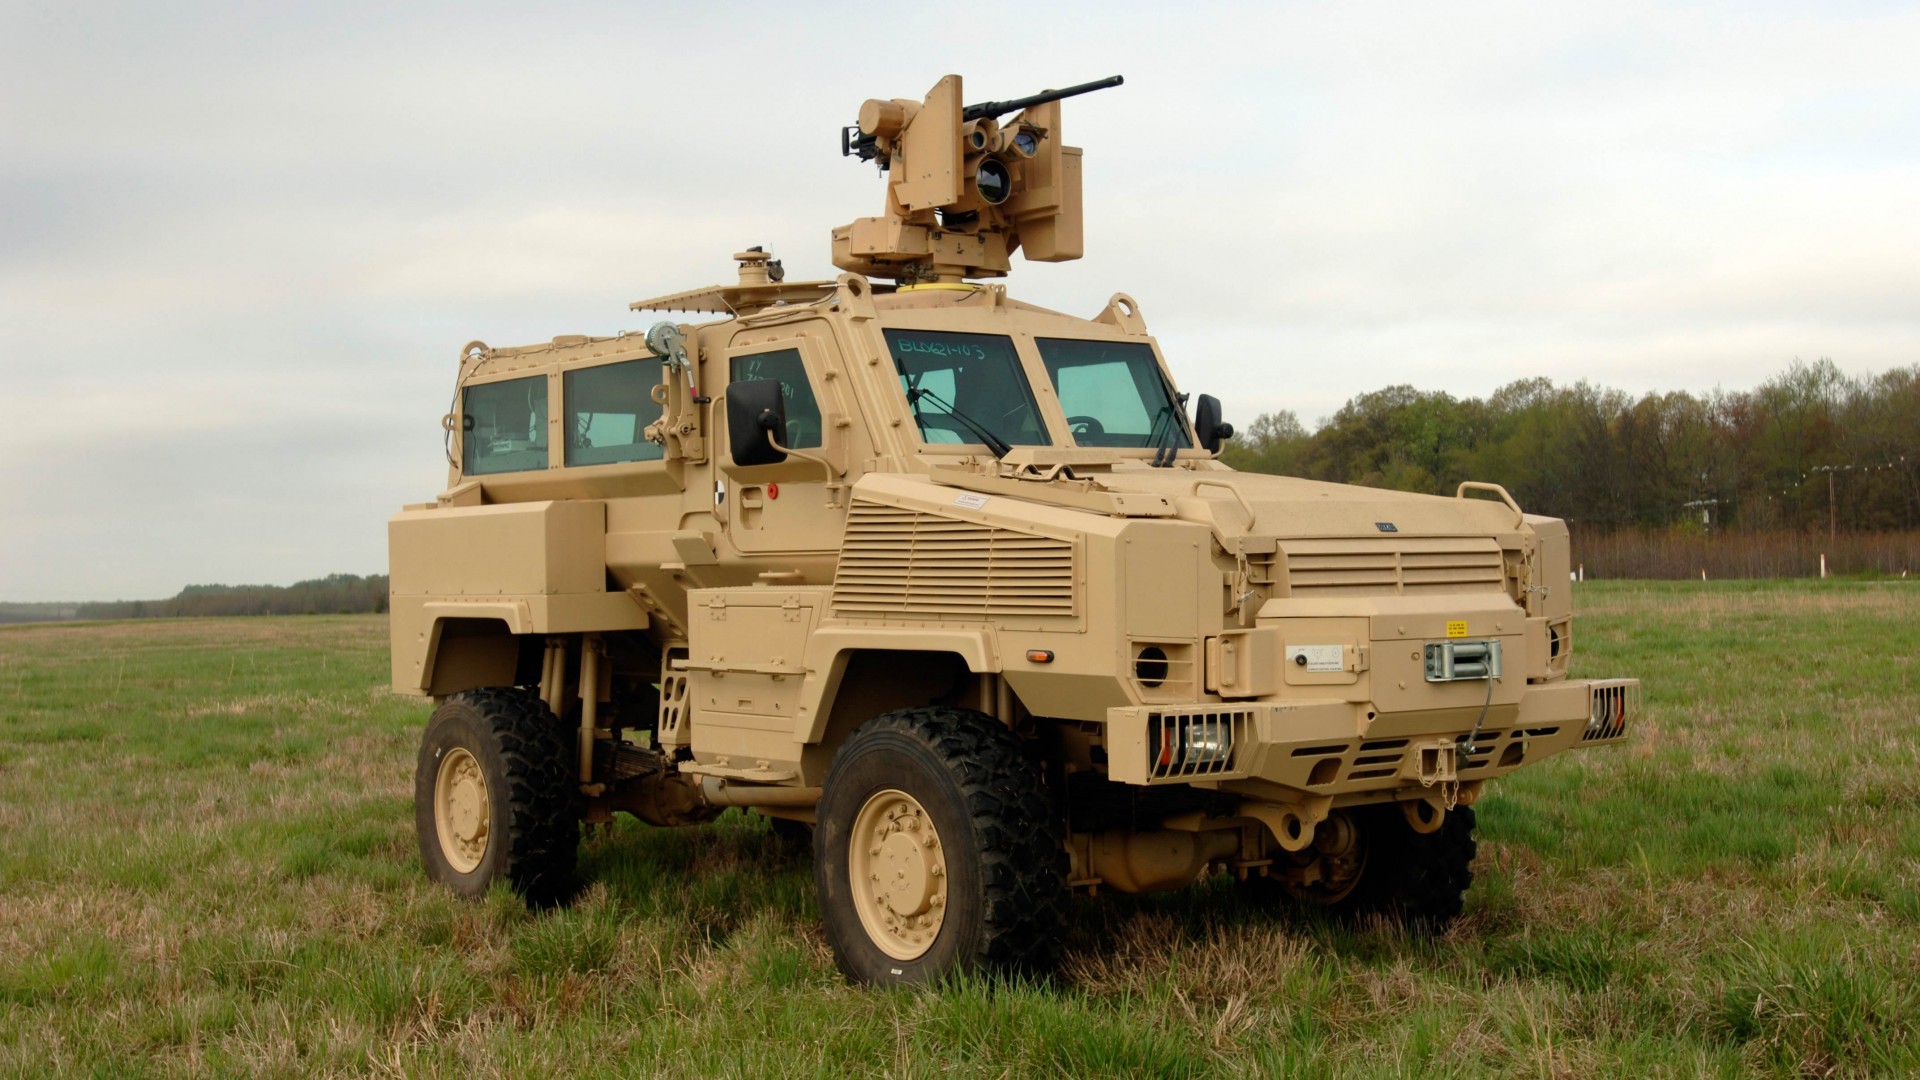 бронеавтомобиль, броневик, Армия США, RG-33, infantry mobility vehicle, BAE Systems, MRAP, IMV, U.S. Army, U.S. Marine, field (horizontal)